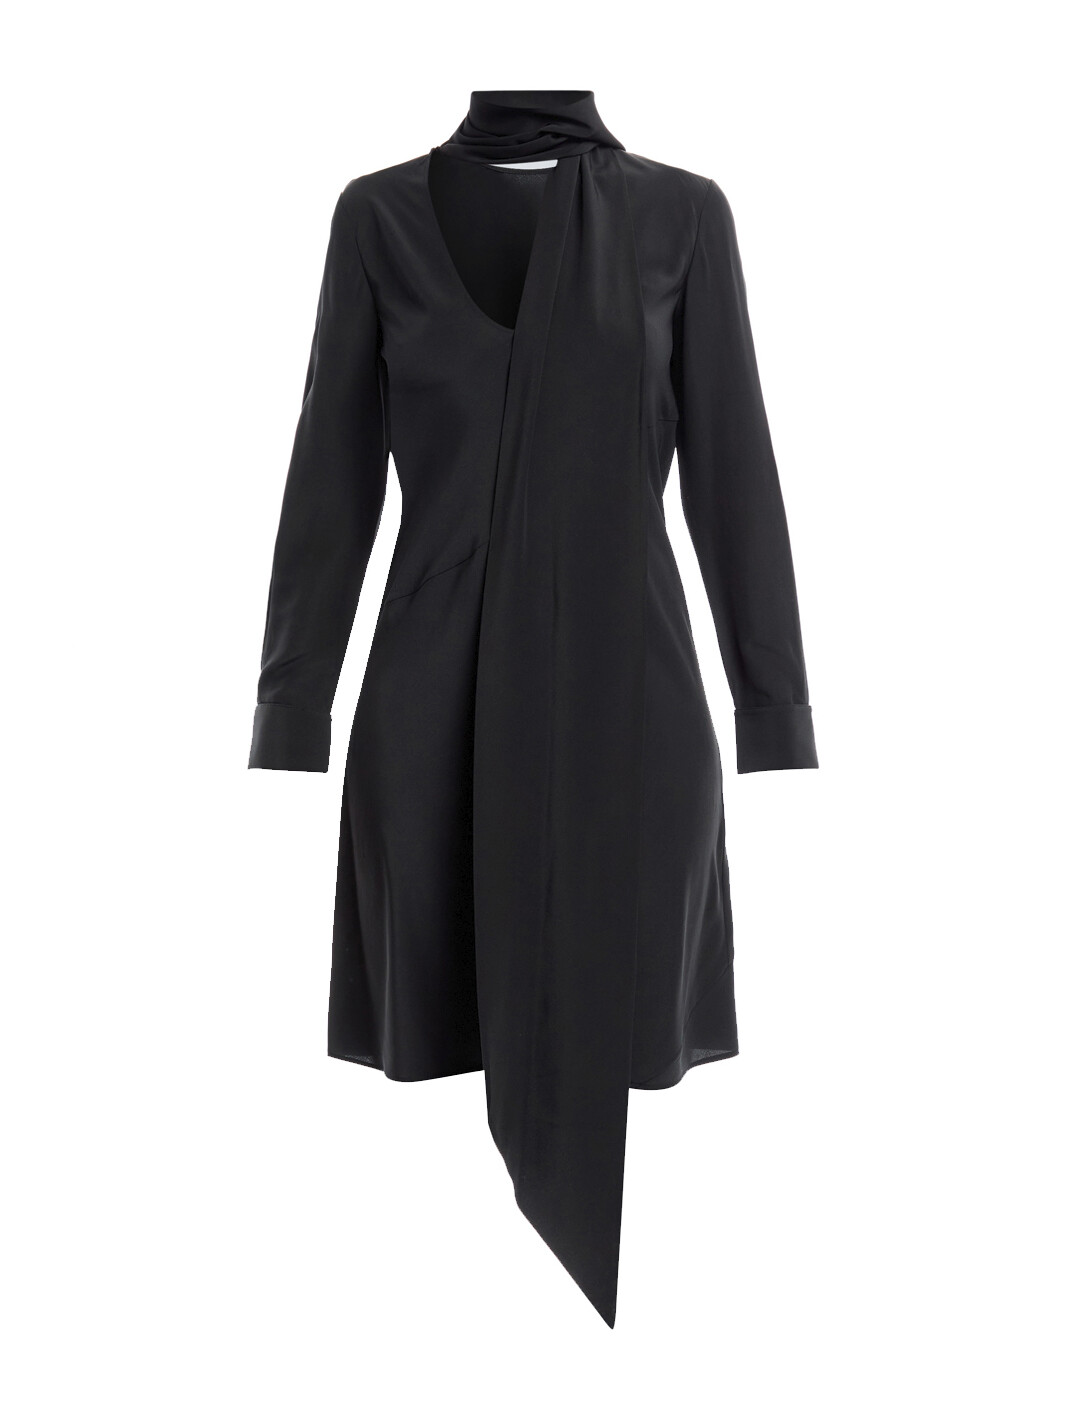 Helmut Lang Women's Scarf Dress Black